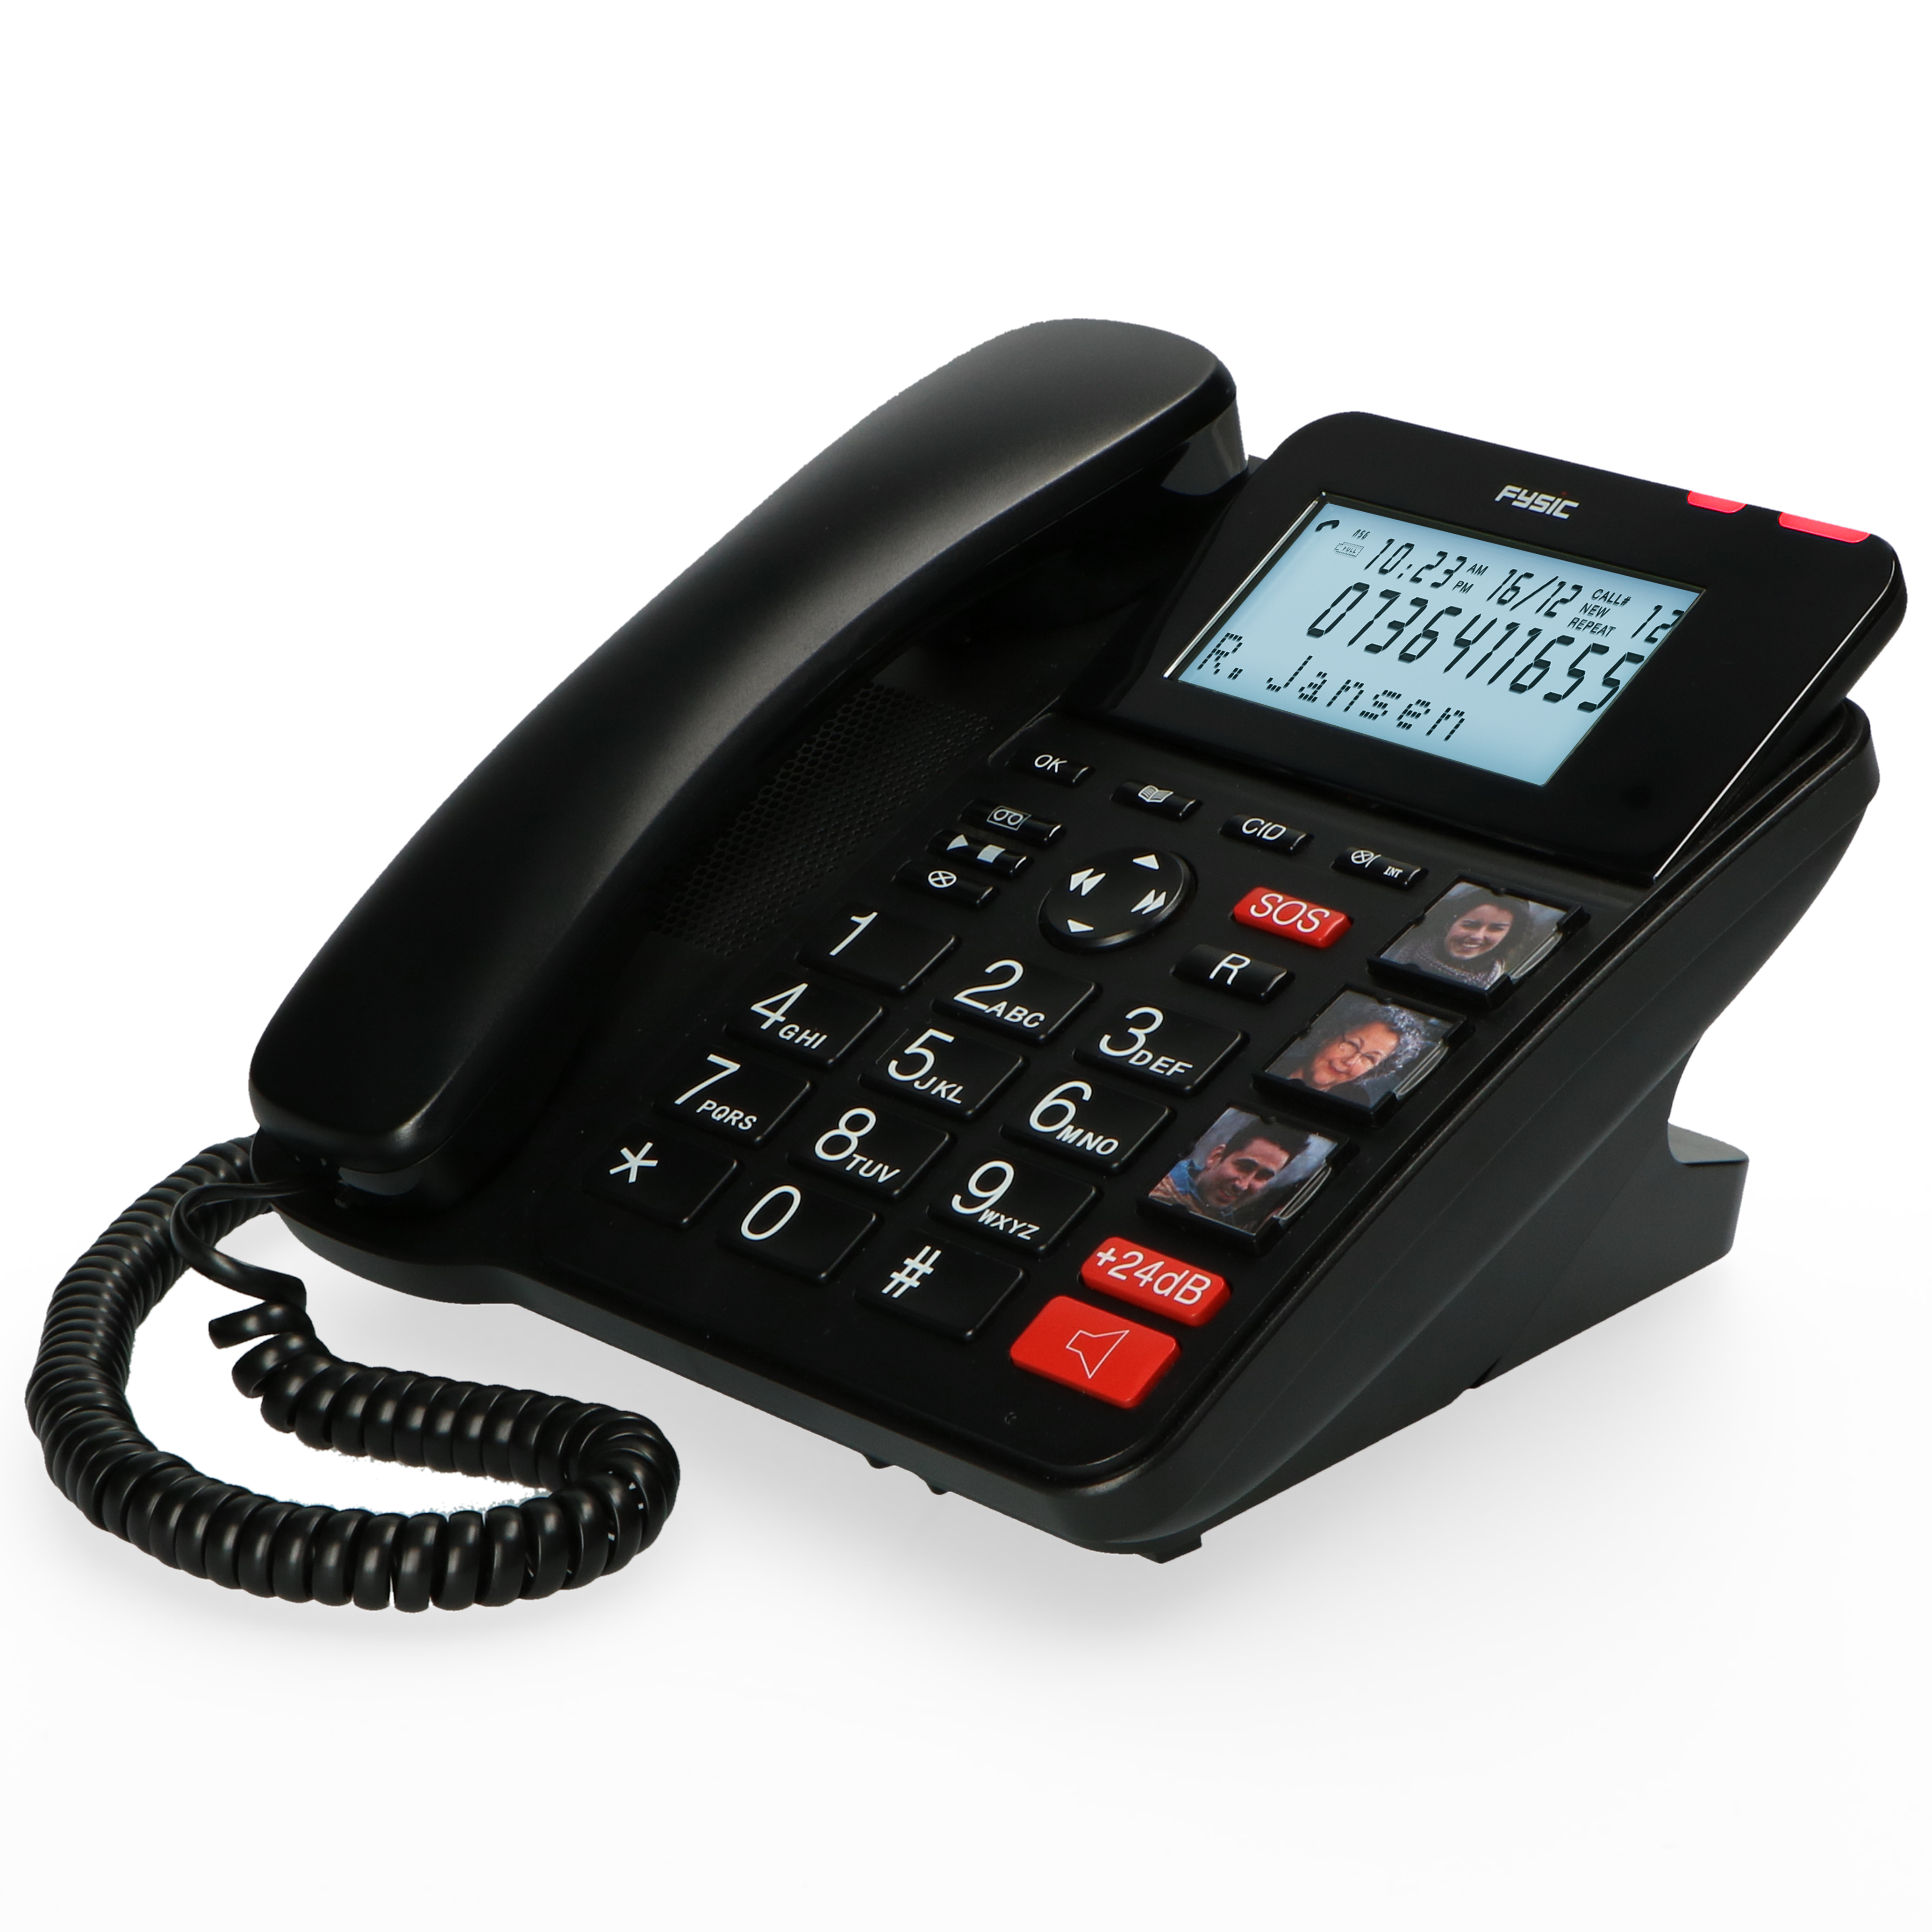 FYSIC FX-8025 mit Tasten,SOS-Taste Klingelverstärker,großen Seniorentelefon - Seniorentelefon extra und Klingelverstärker mit Handset